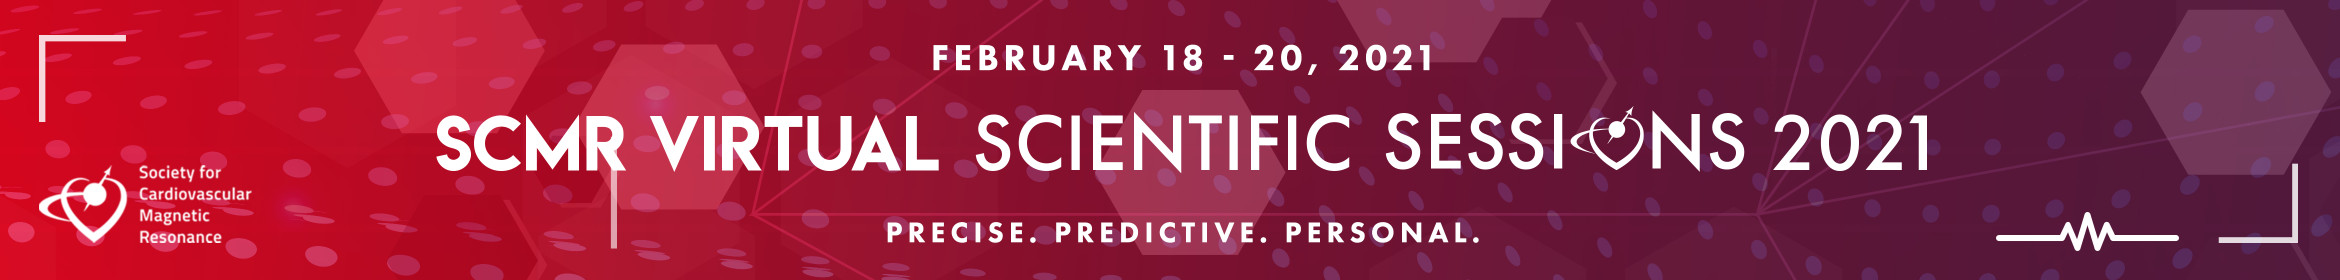 SCMR Virtual Scientific Sessions 2021 Main banner